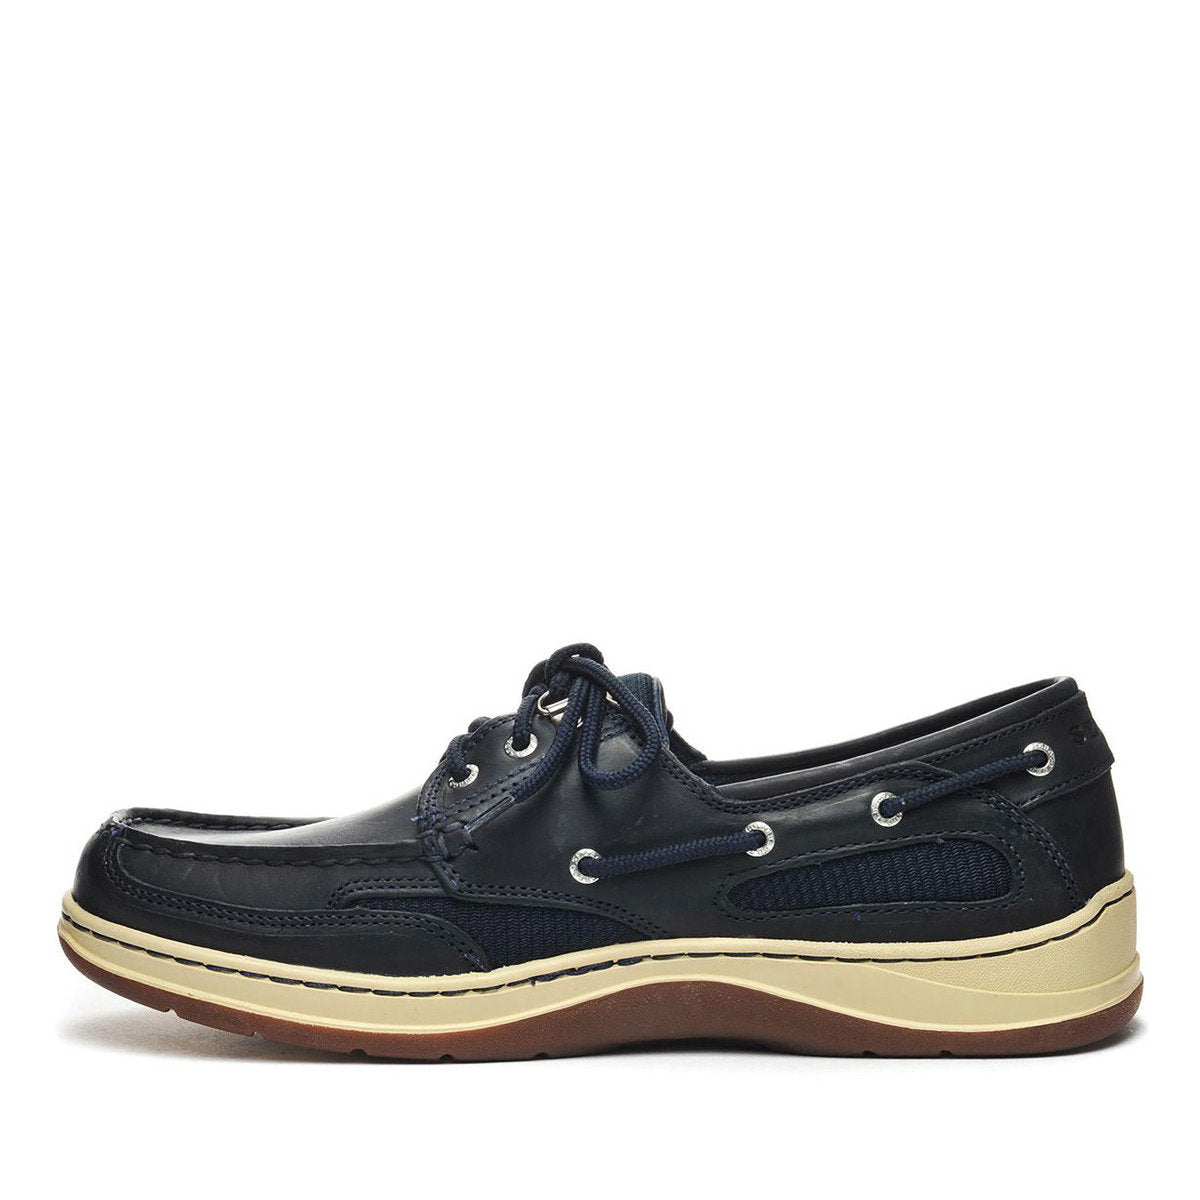 Sebago Men's 7000GEO Clovehitch II Waxed Leather Boat Shoes Navy Blue